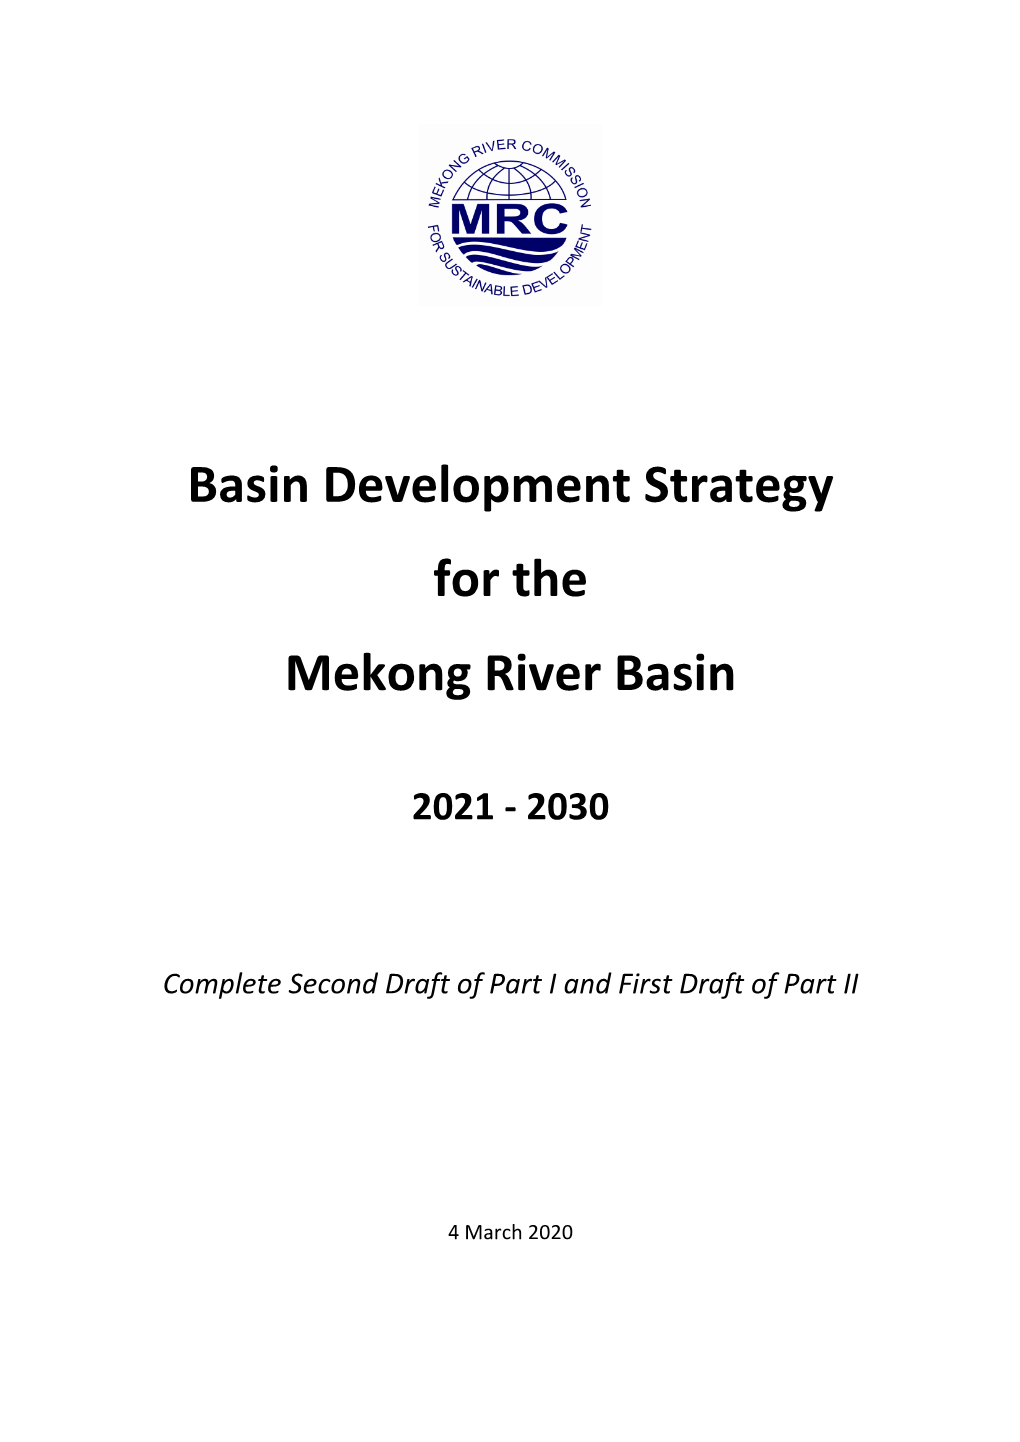 Draft Basin Development Strategy 2021-2030